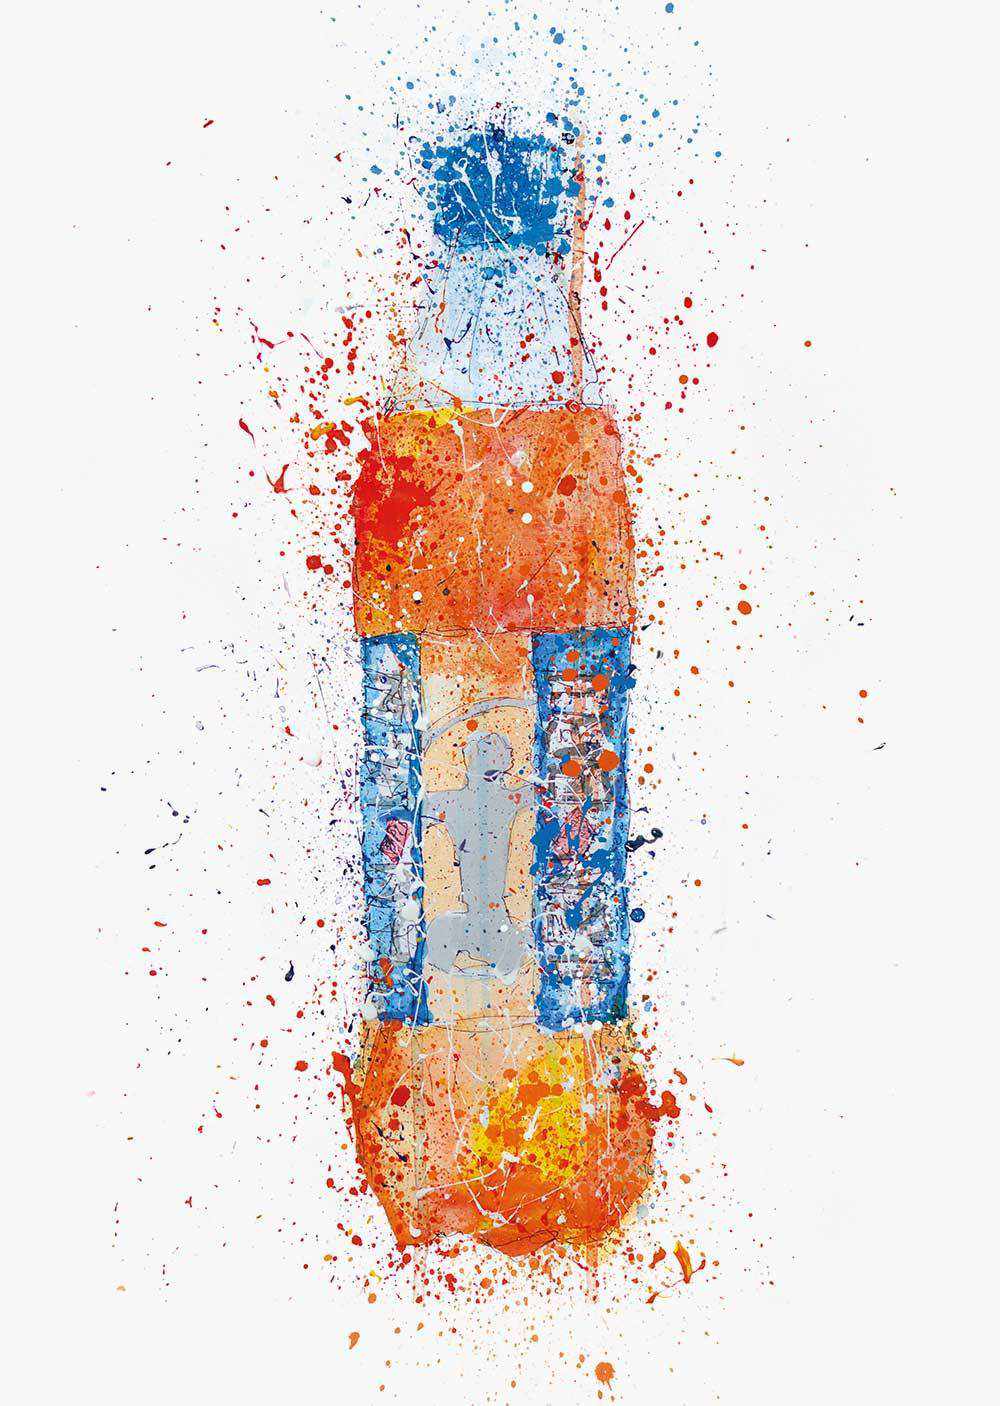 Soda Bottle Wall Art Print 'Tangerine'-We Love Prints